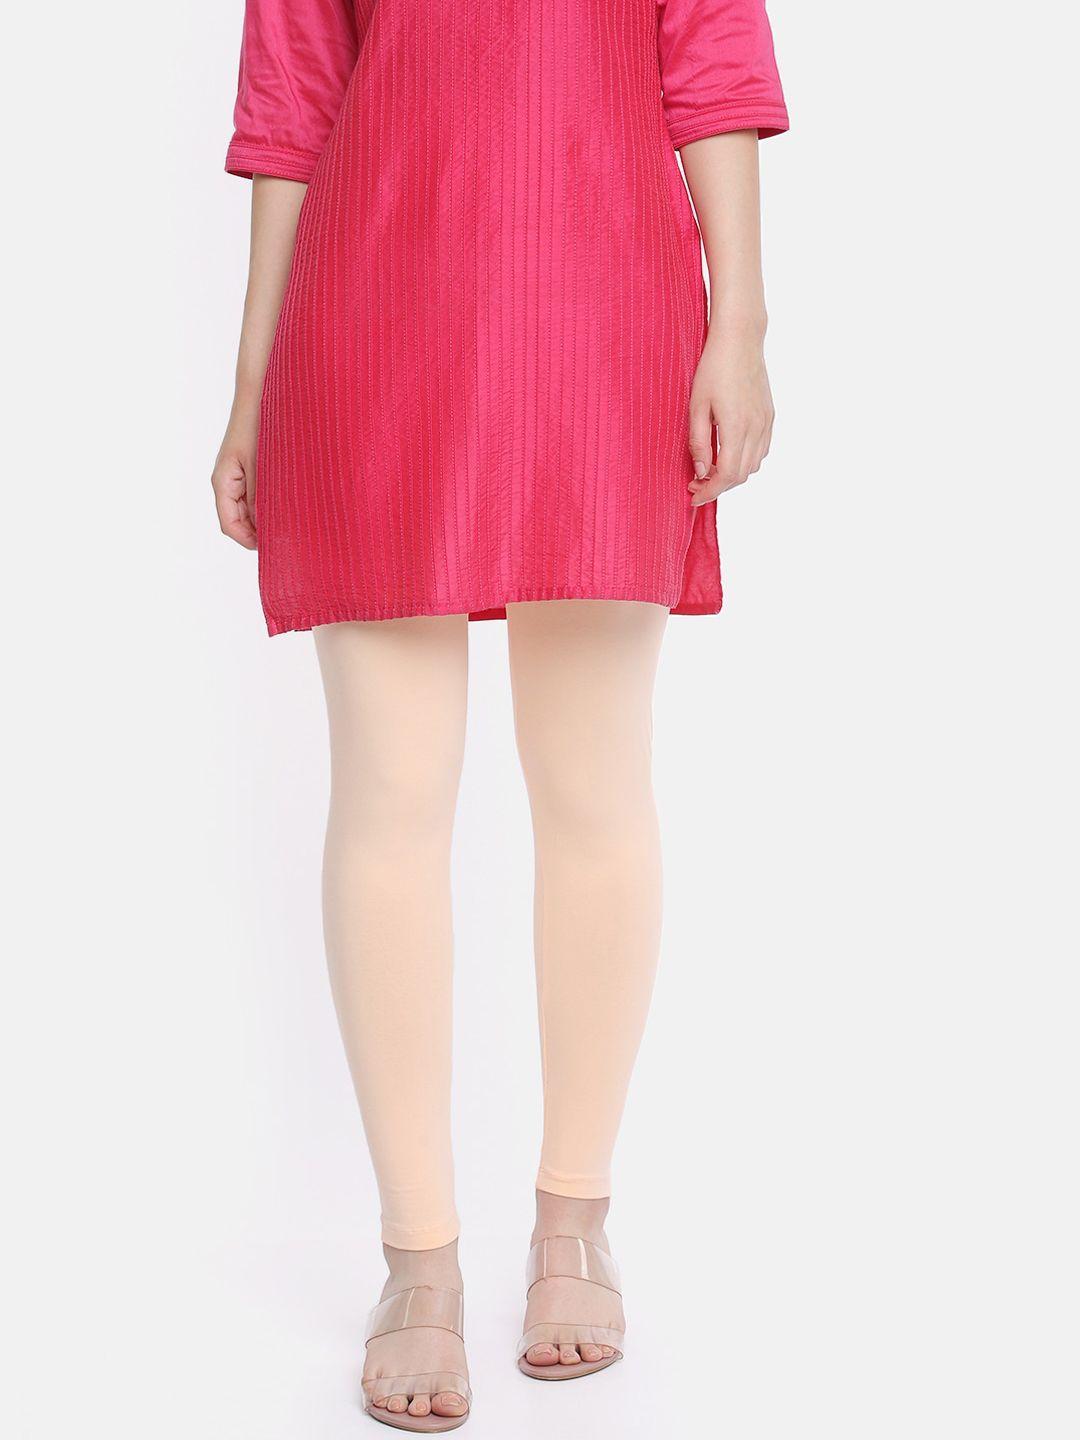 dollar missy women peach-coloured solid ankle-length leggings